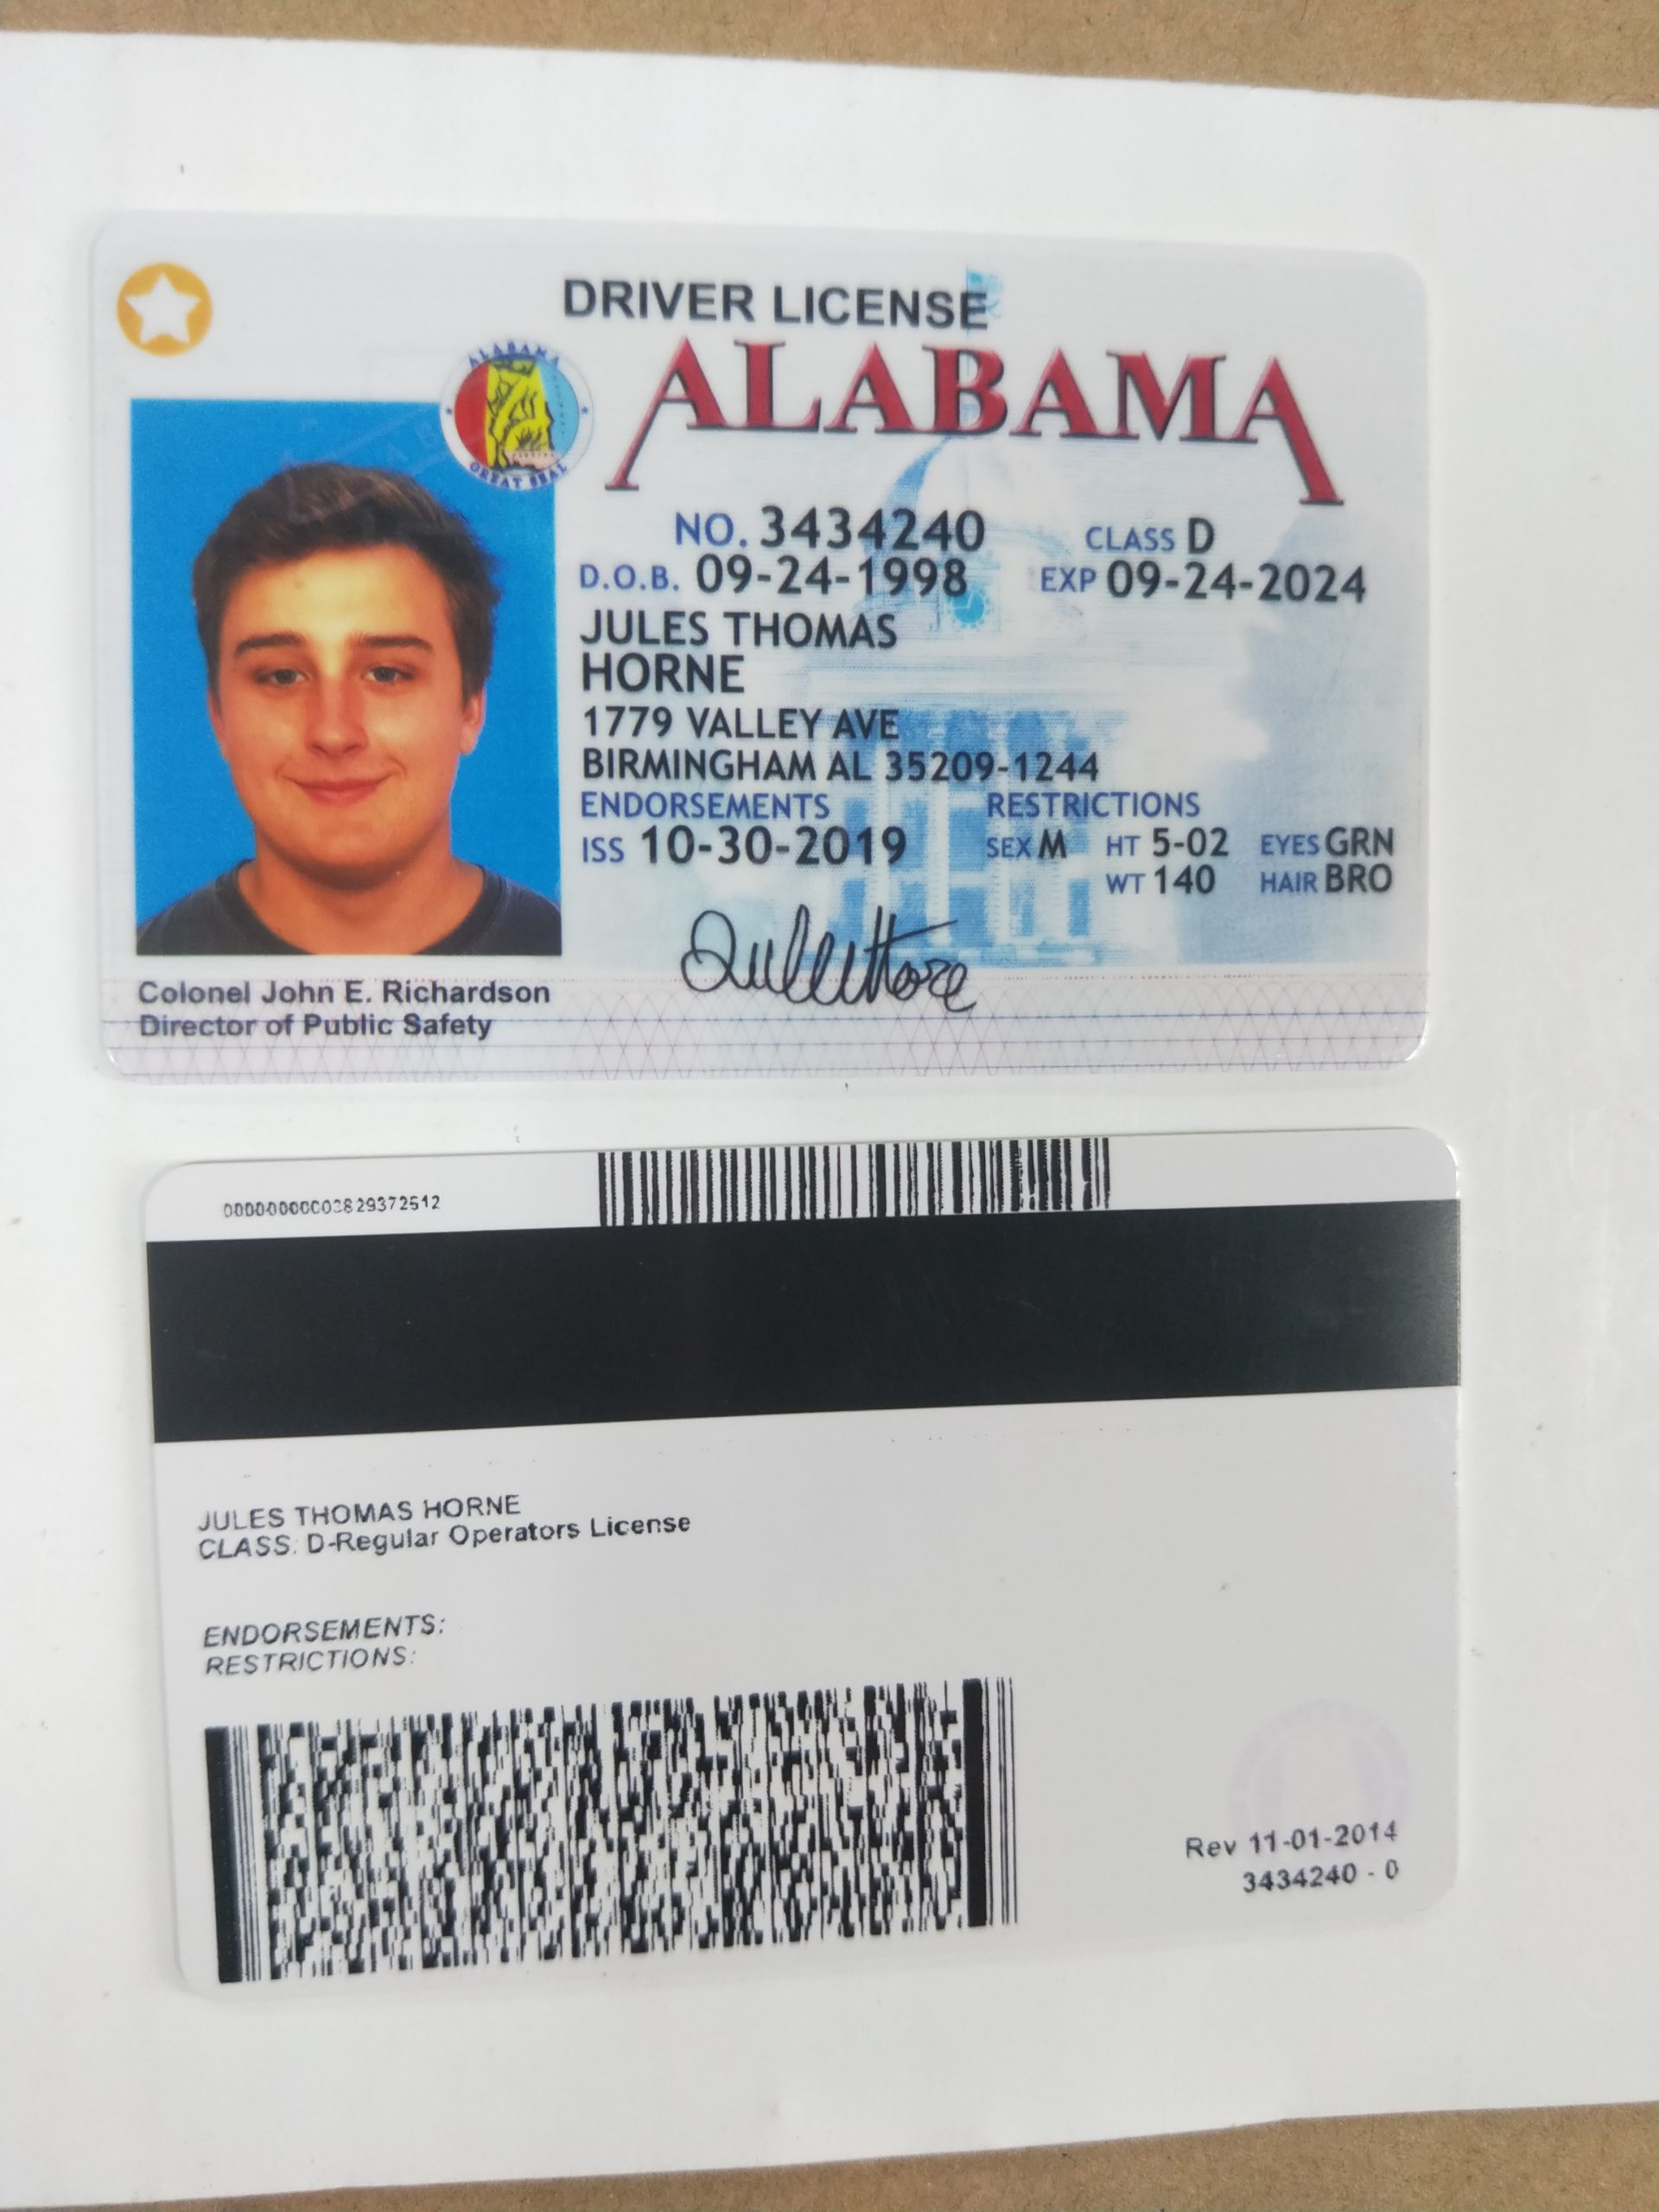 fake alabama drivers license template